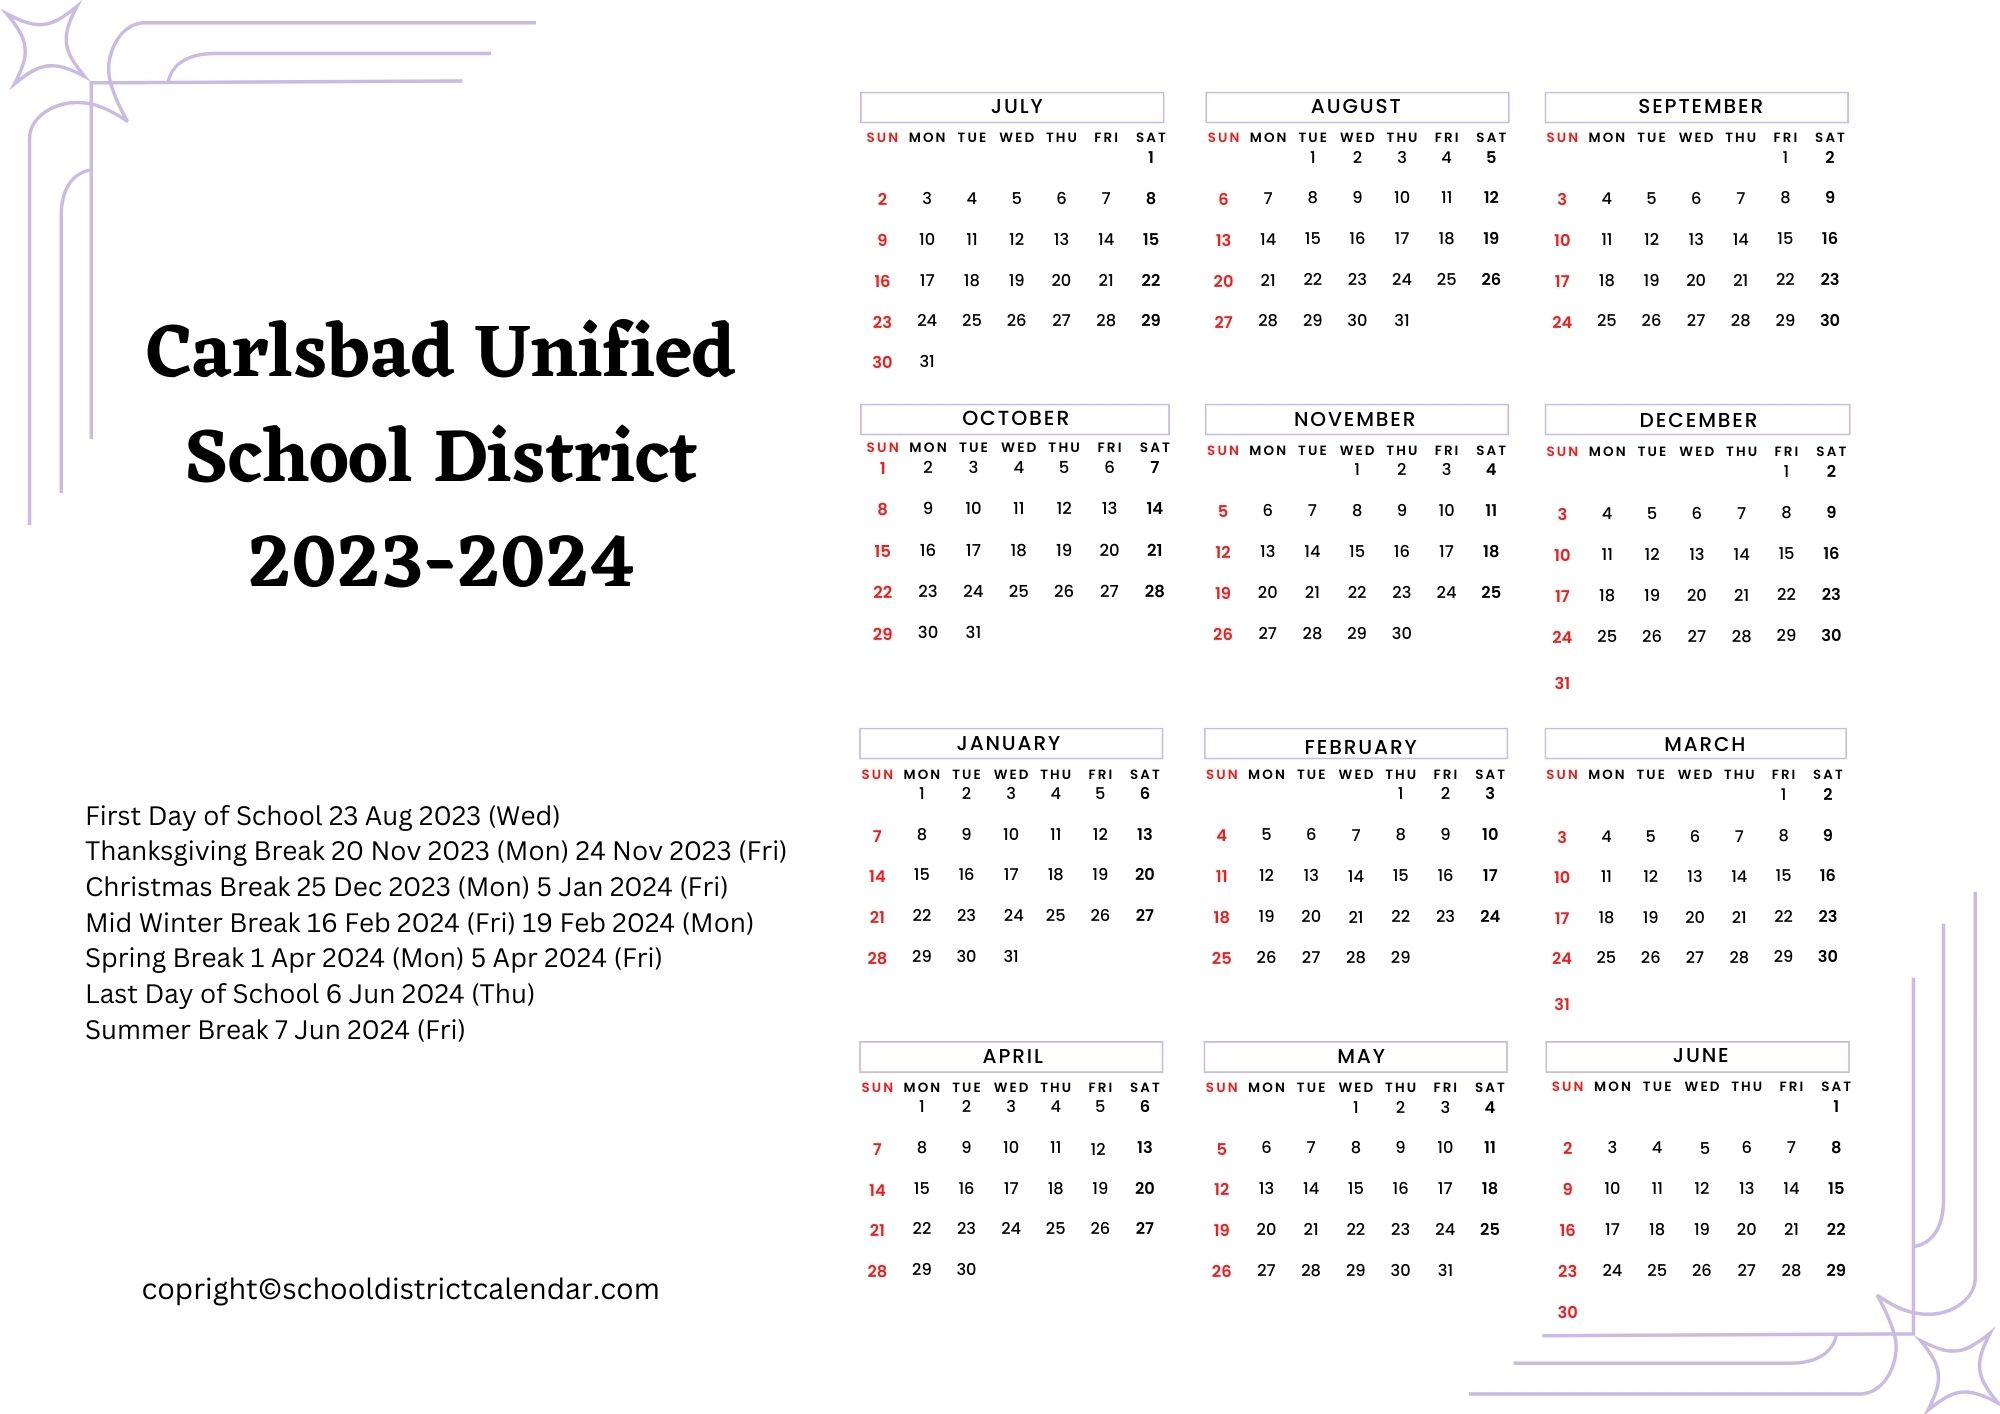 Carlsbad Unified School District Calendar Holidays 2023 2024